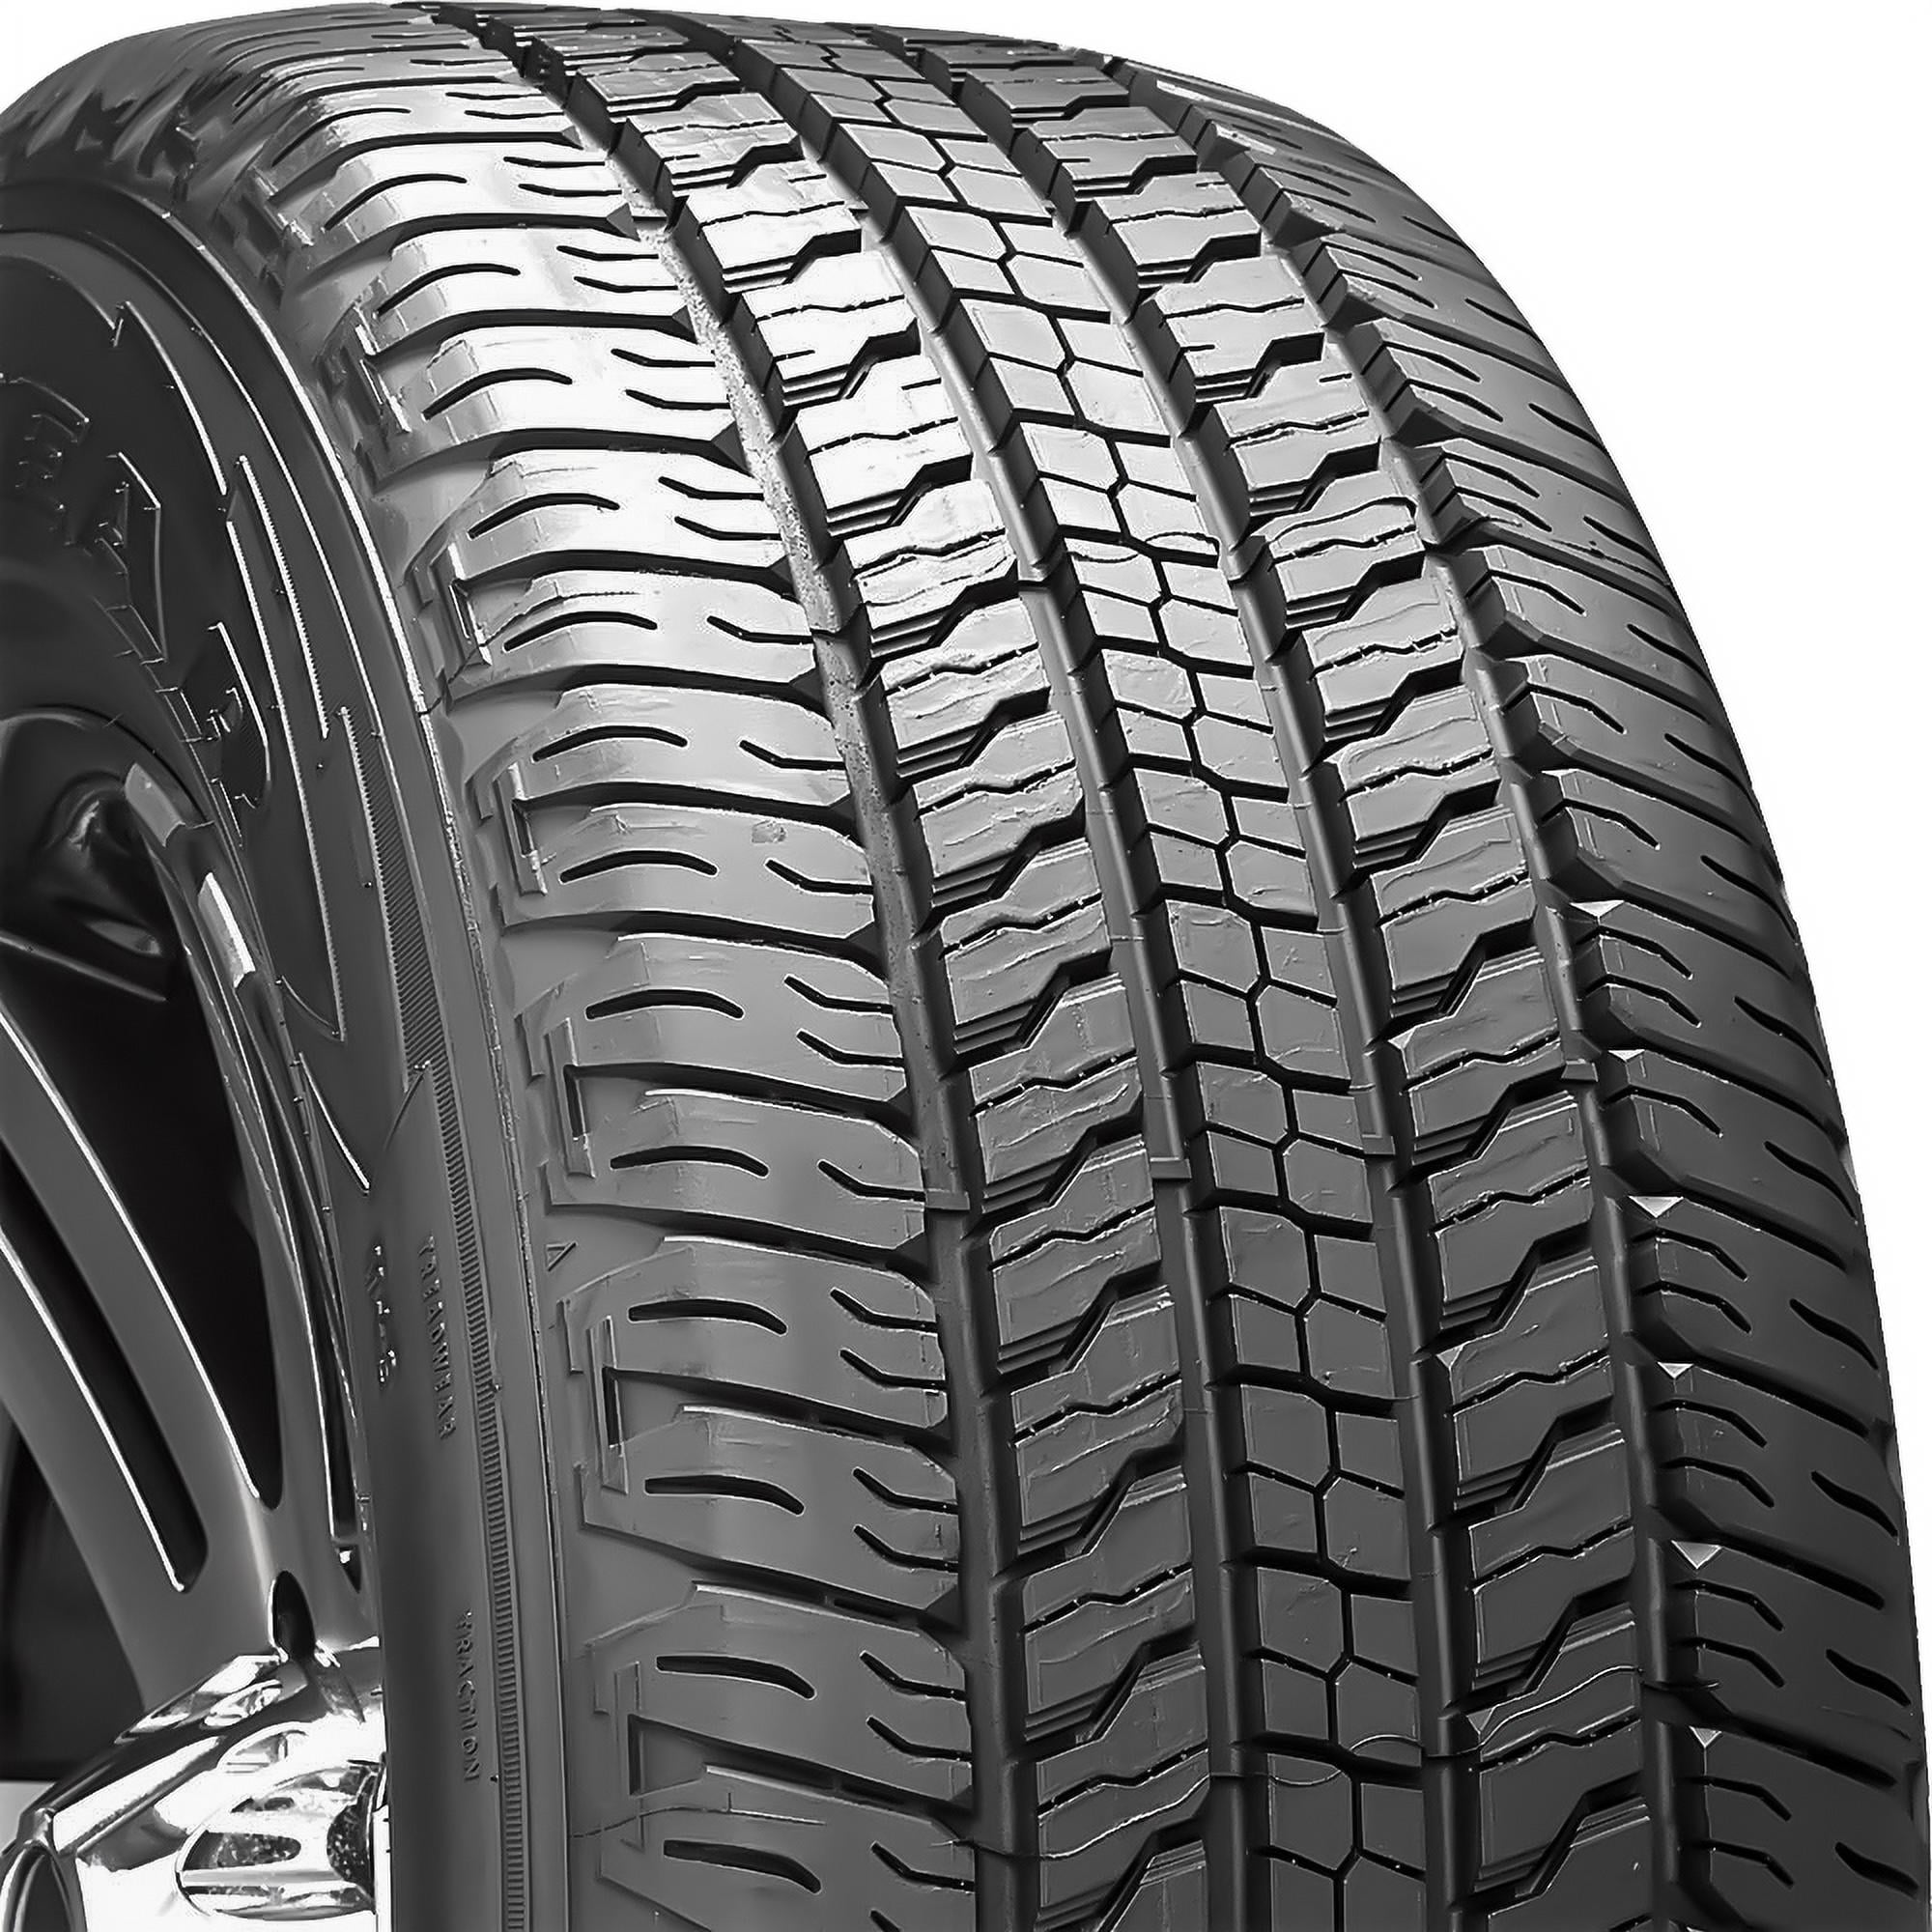 Goodyear Wrangler Fortitude HT 235/75R16 112T XL A/S All Season Tire -  